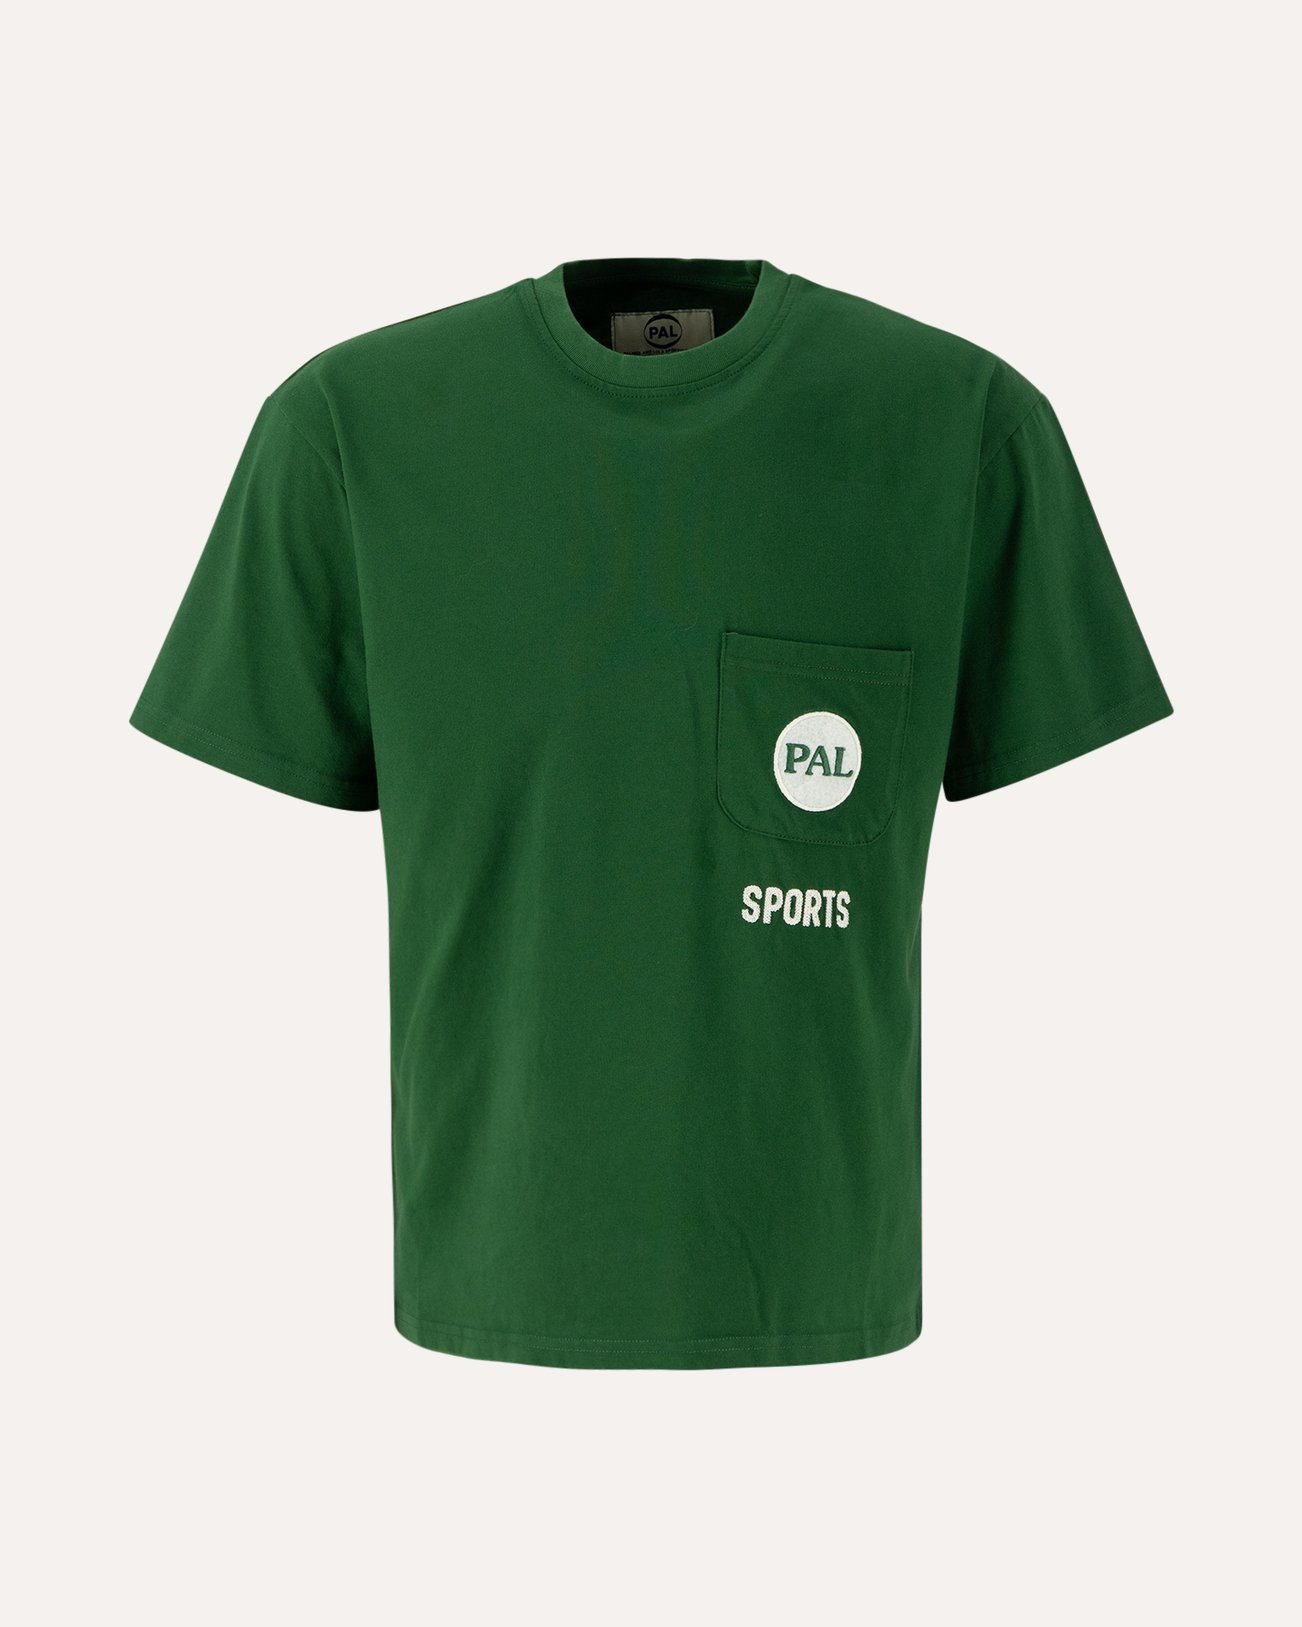 PAL Sporting Goods Broadcast Pocket Tshirt GREEN 1